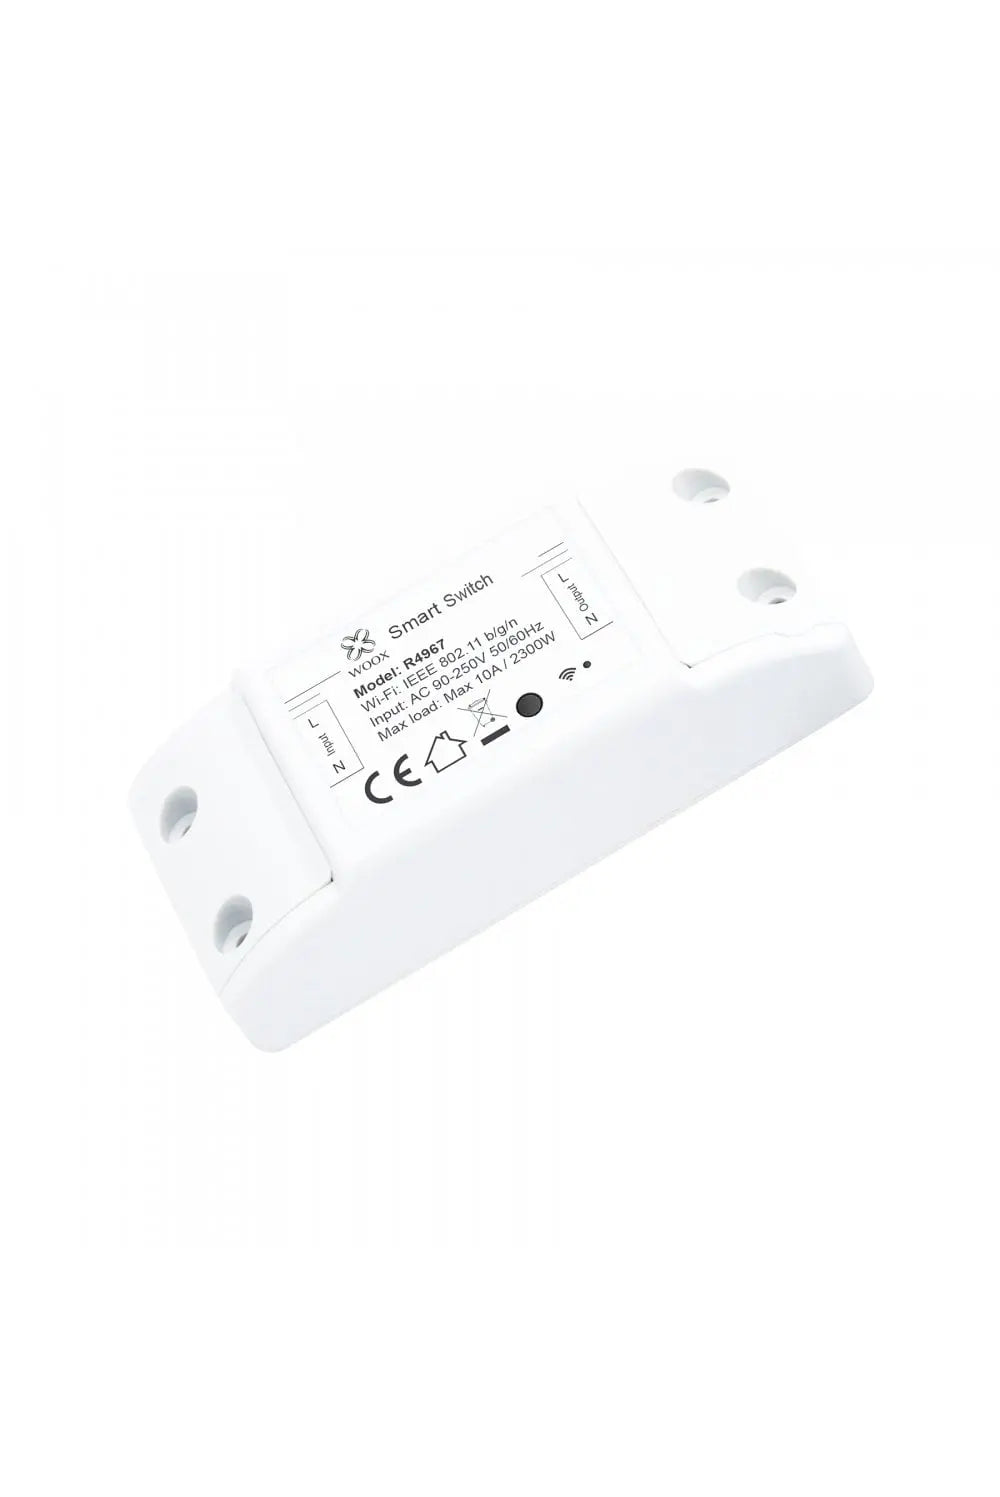 woox-r4967-smart-integrational-power-switch-p20-200_image